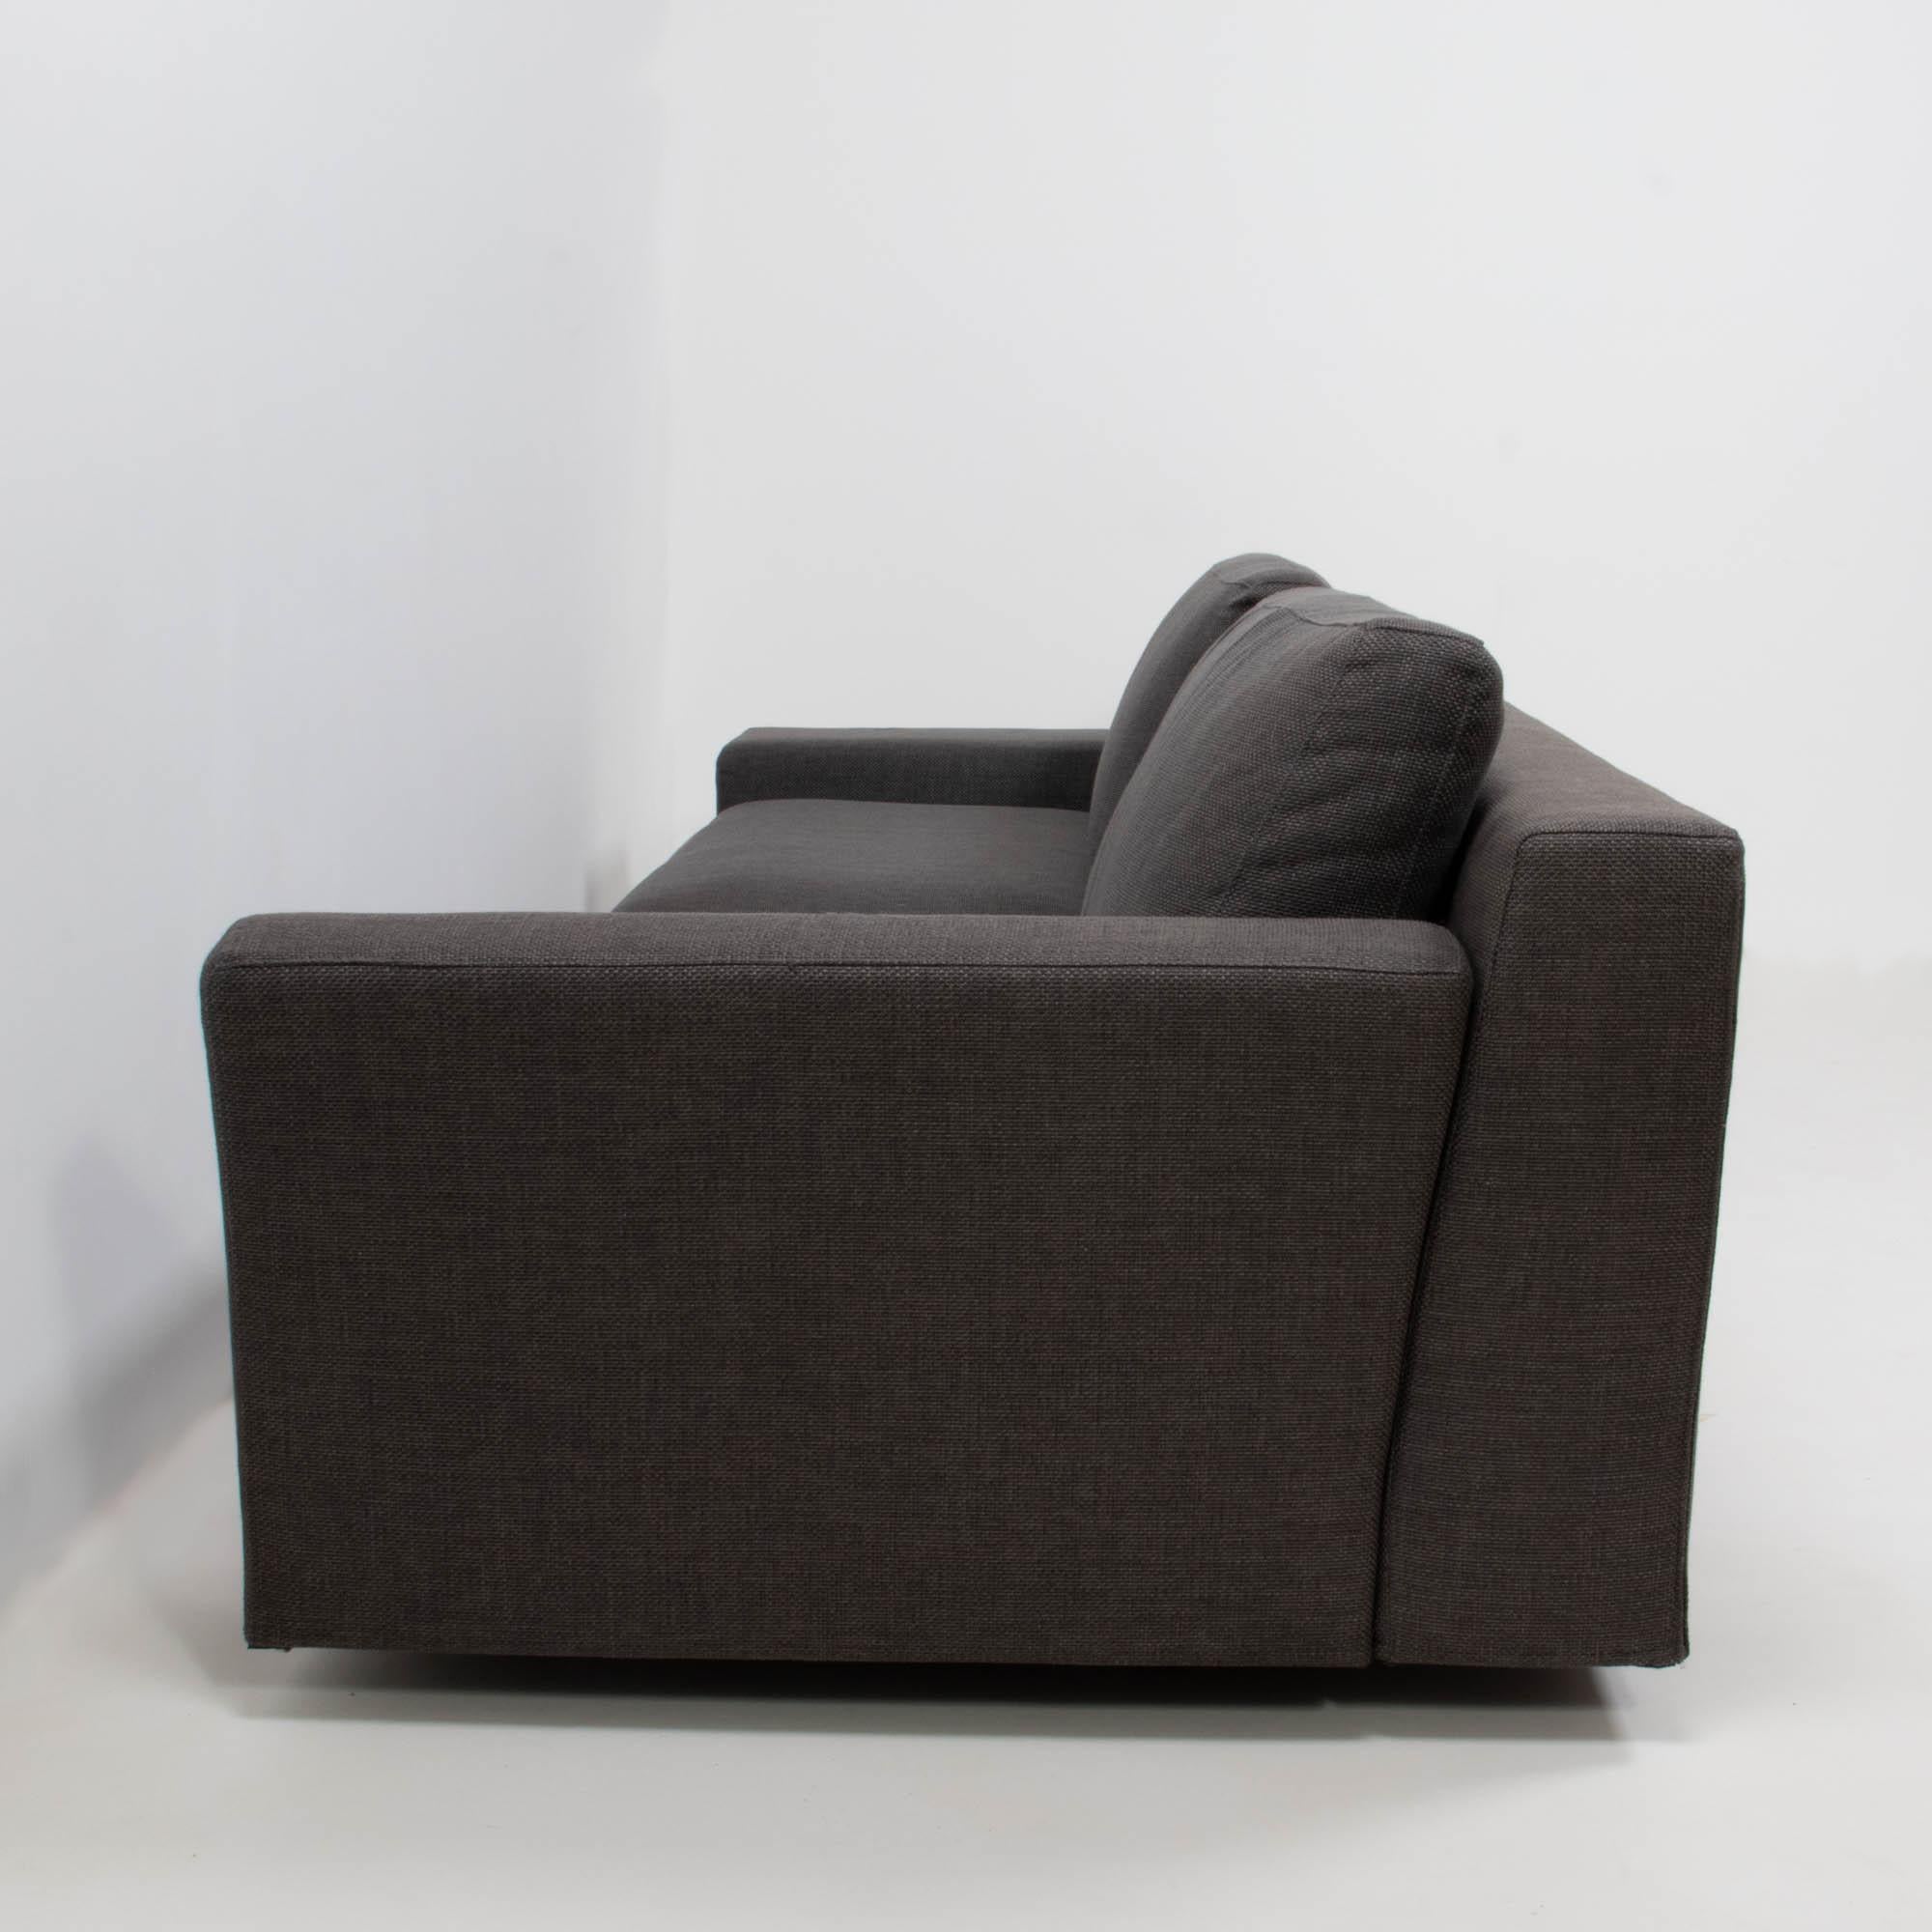 Italian Philippe Starck for Cassina Grey Fabric Mister Sofa